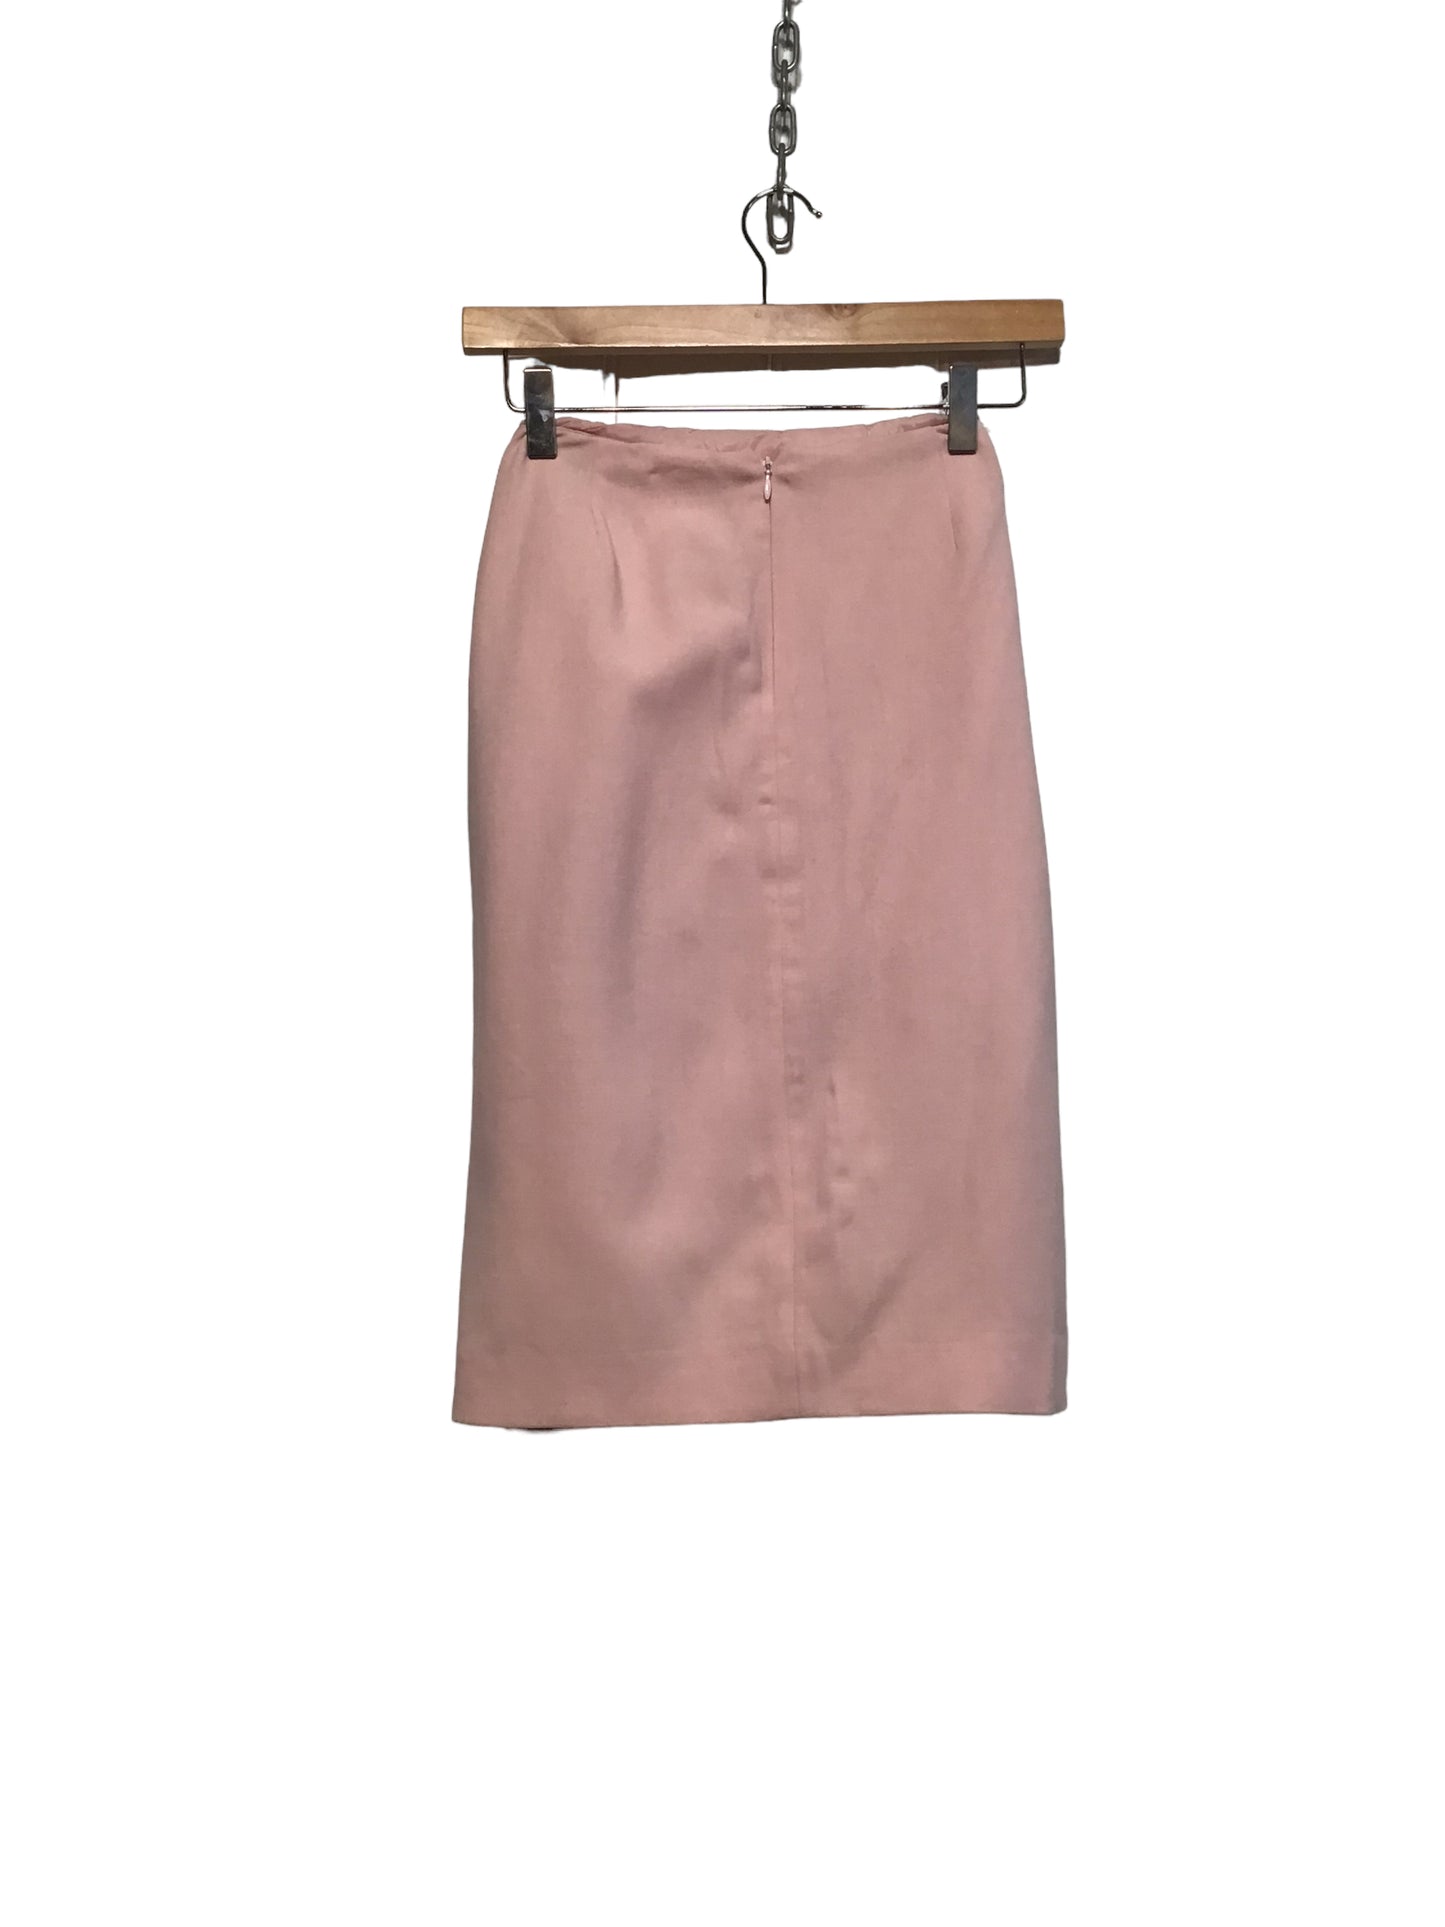 Ralph Lauren Pink Jacket and Skirt Set (Size M)